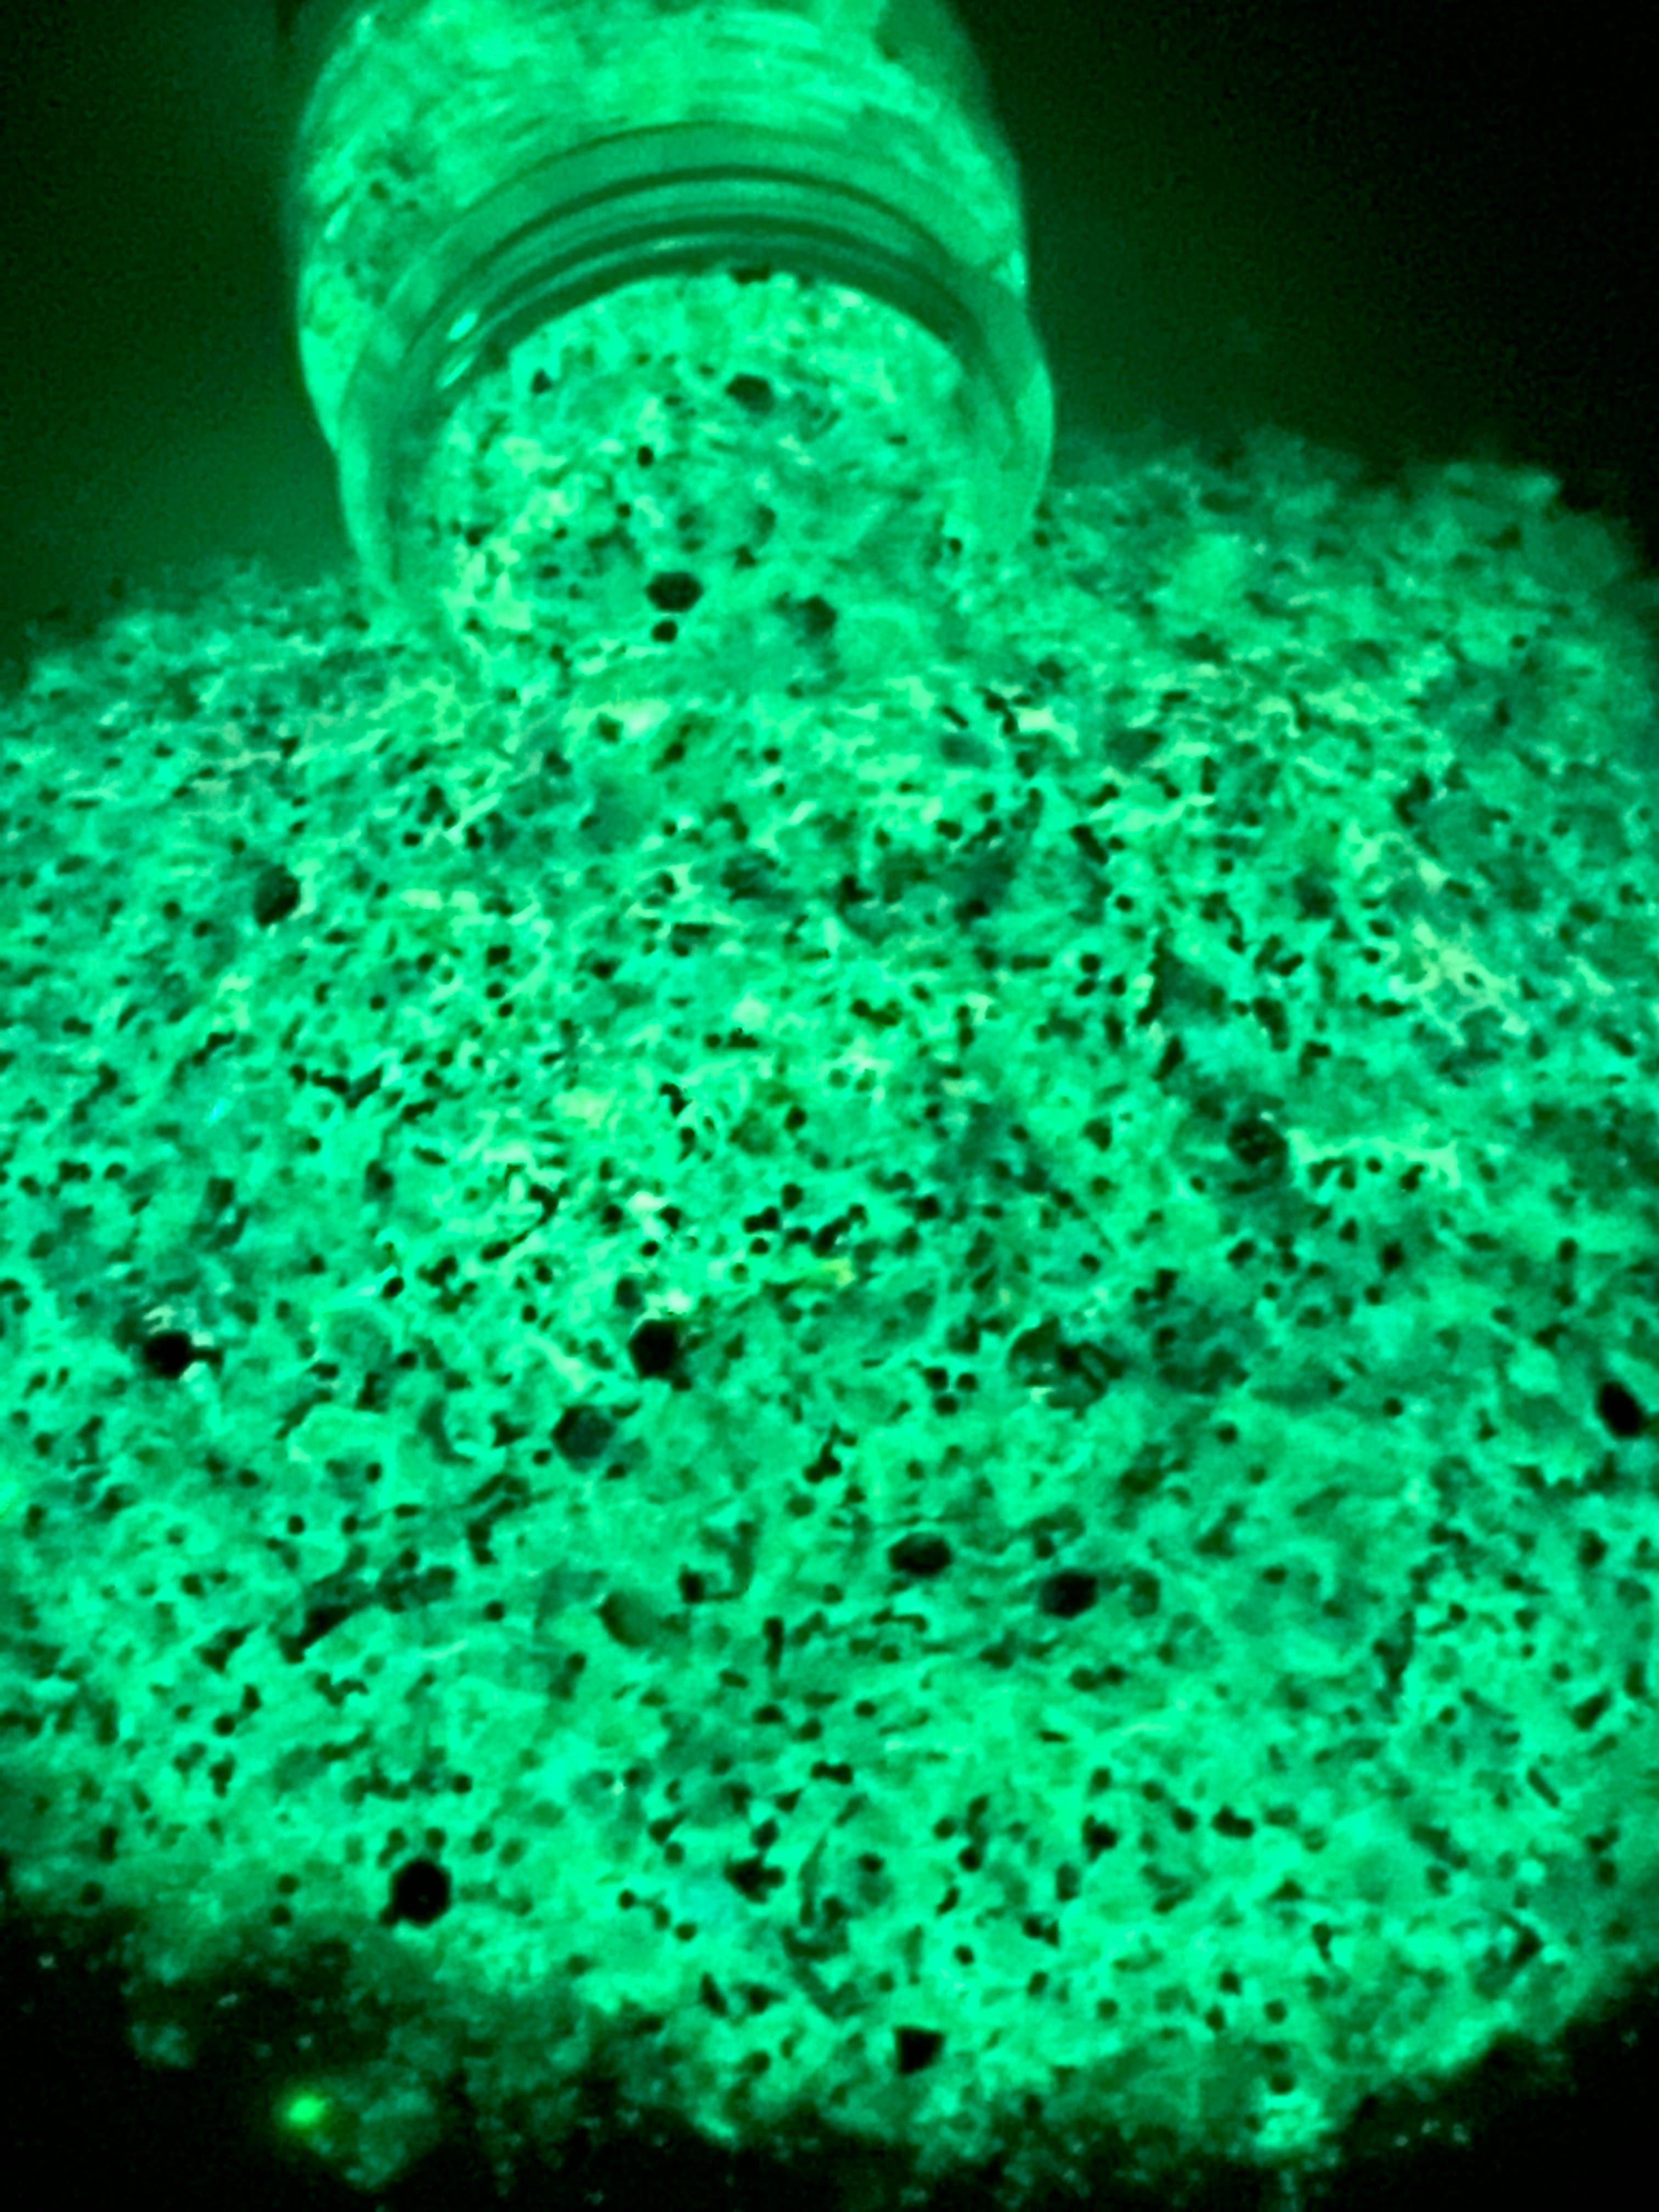 Sulfur - Fine Glow in the Dark Glitter – Glitter Chimp